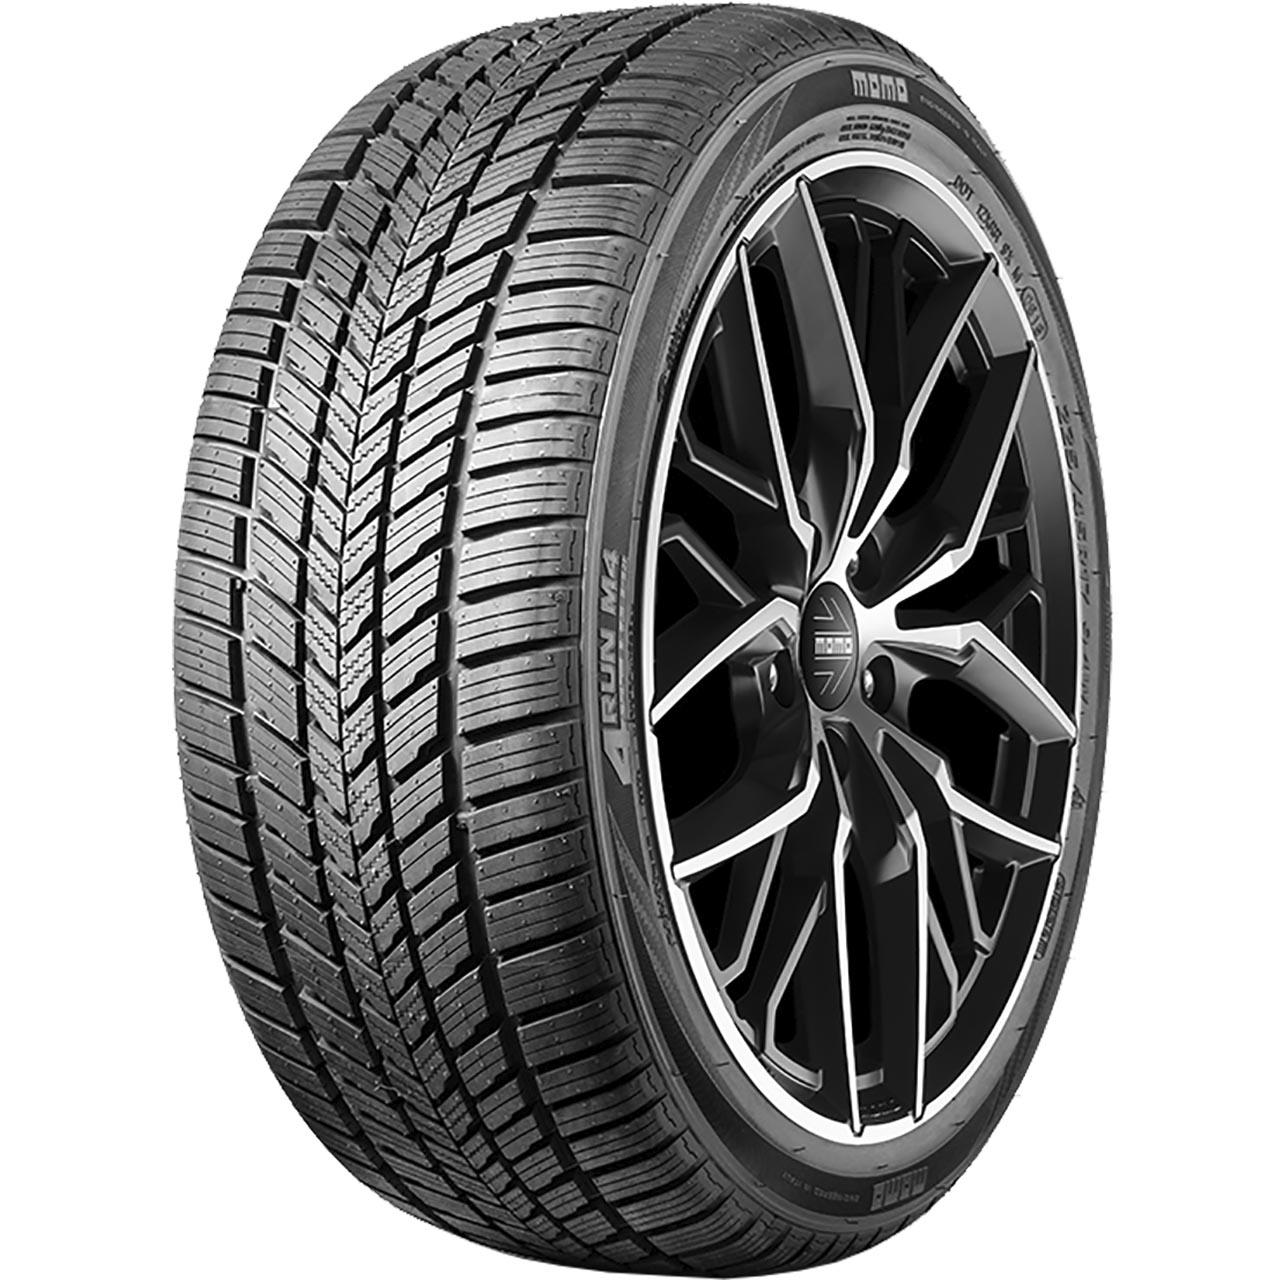 Momo Tire M 4 Four Season 165/60R14 79H XL